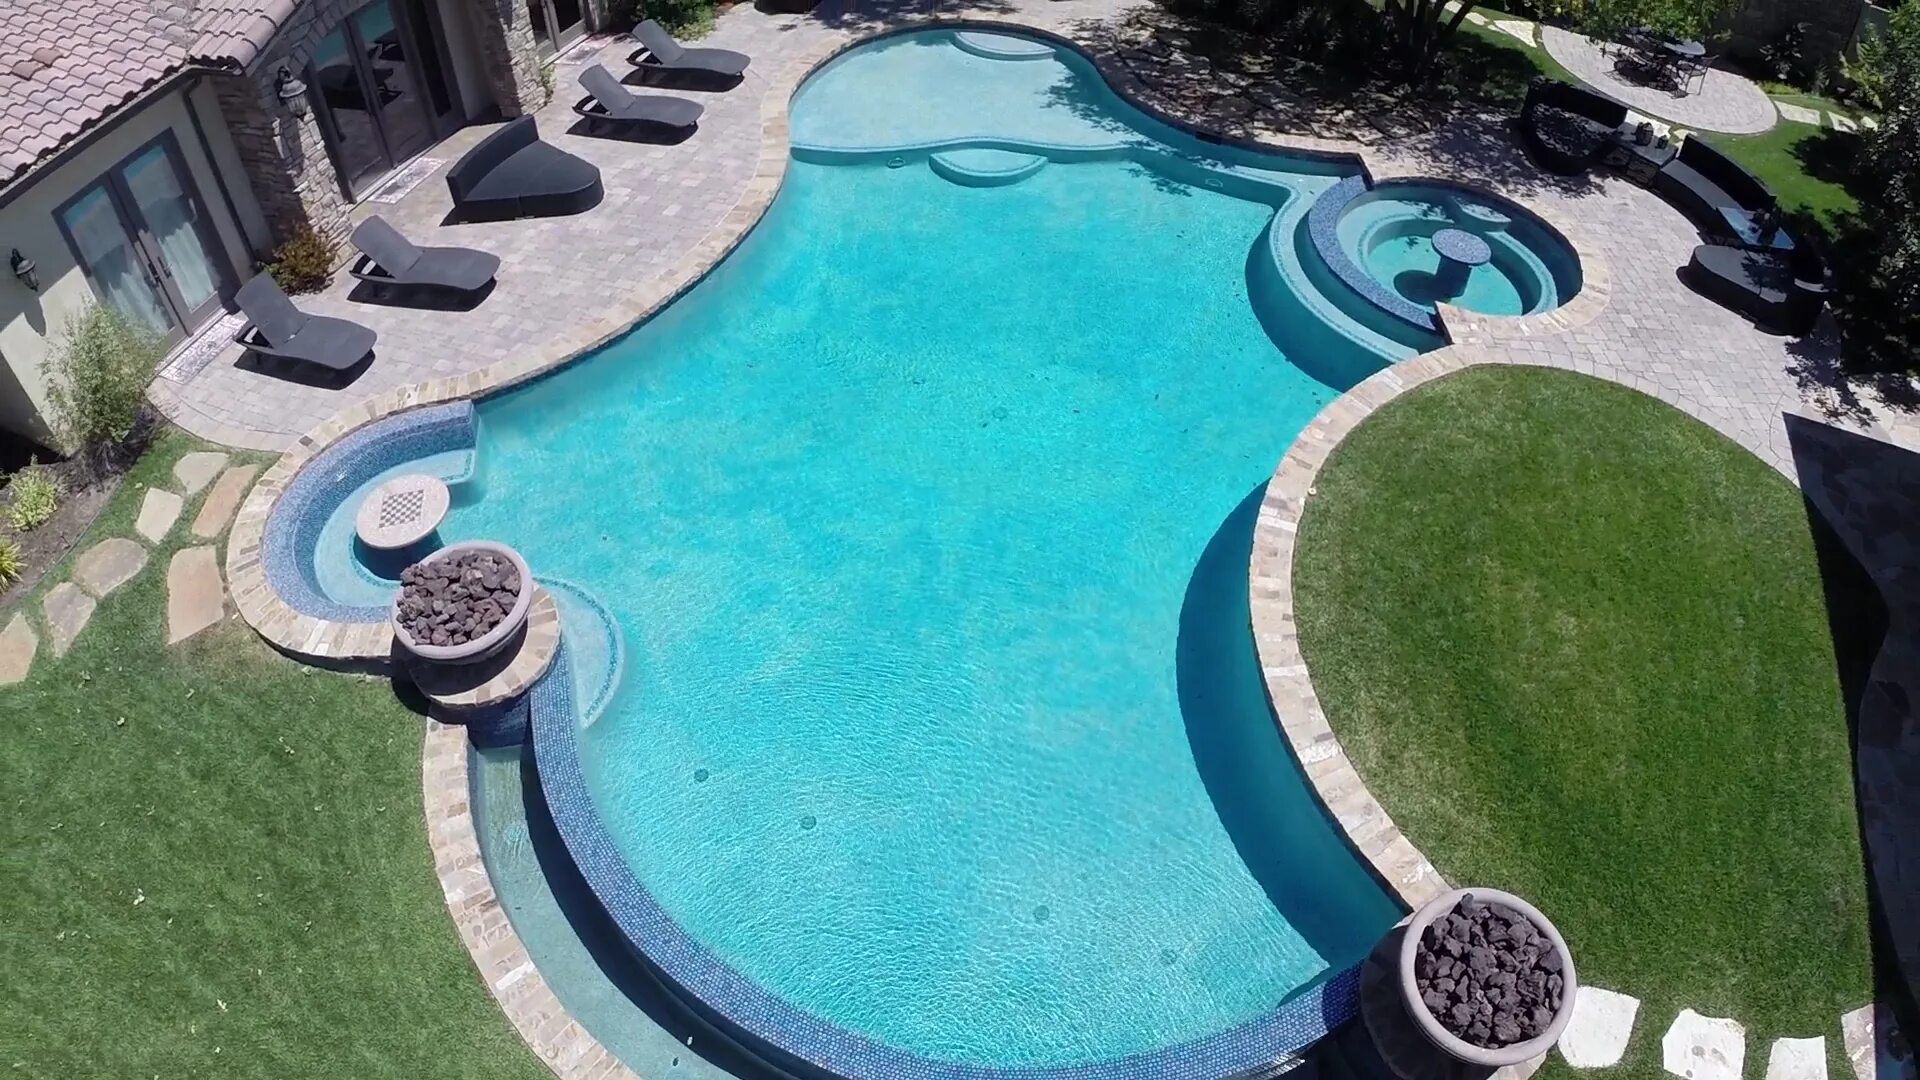 Rplant pool. Бассейн фото с дрона. Детский бассейн Anlipool Green Style/зеленый стиль 40 см. K1pool. Swimming Pool иллюстрации 1250 620.